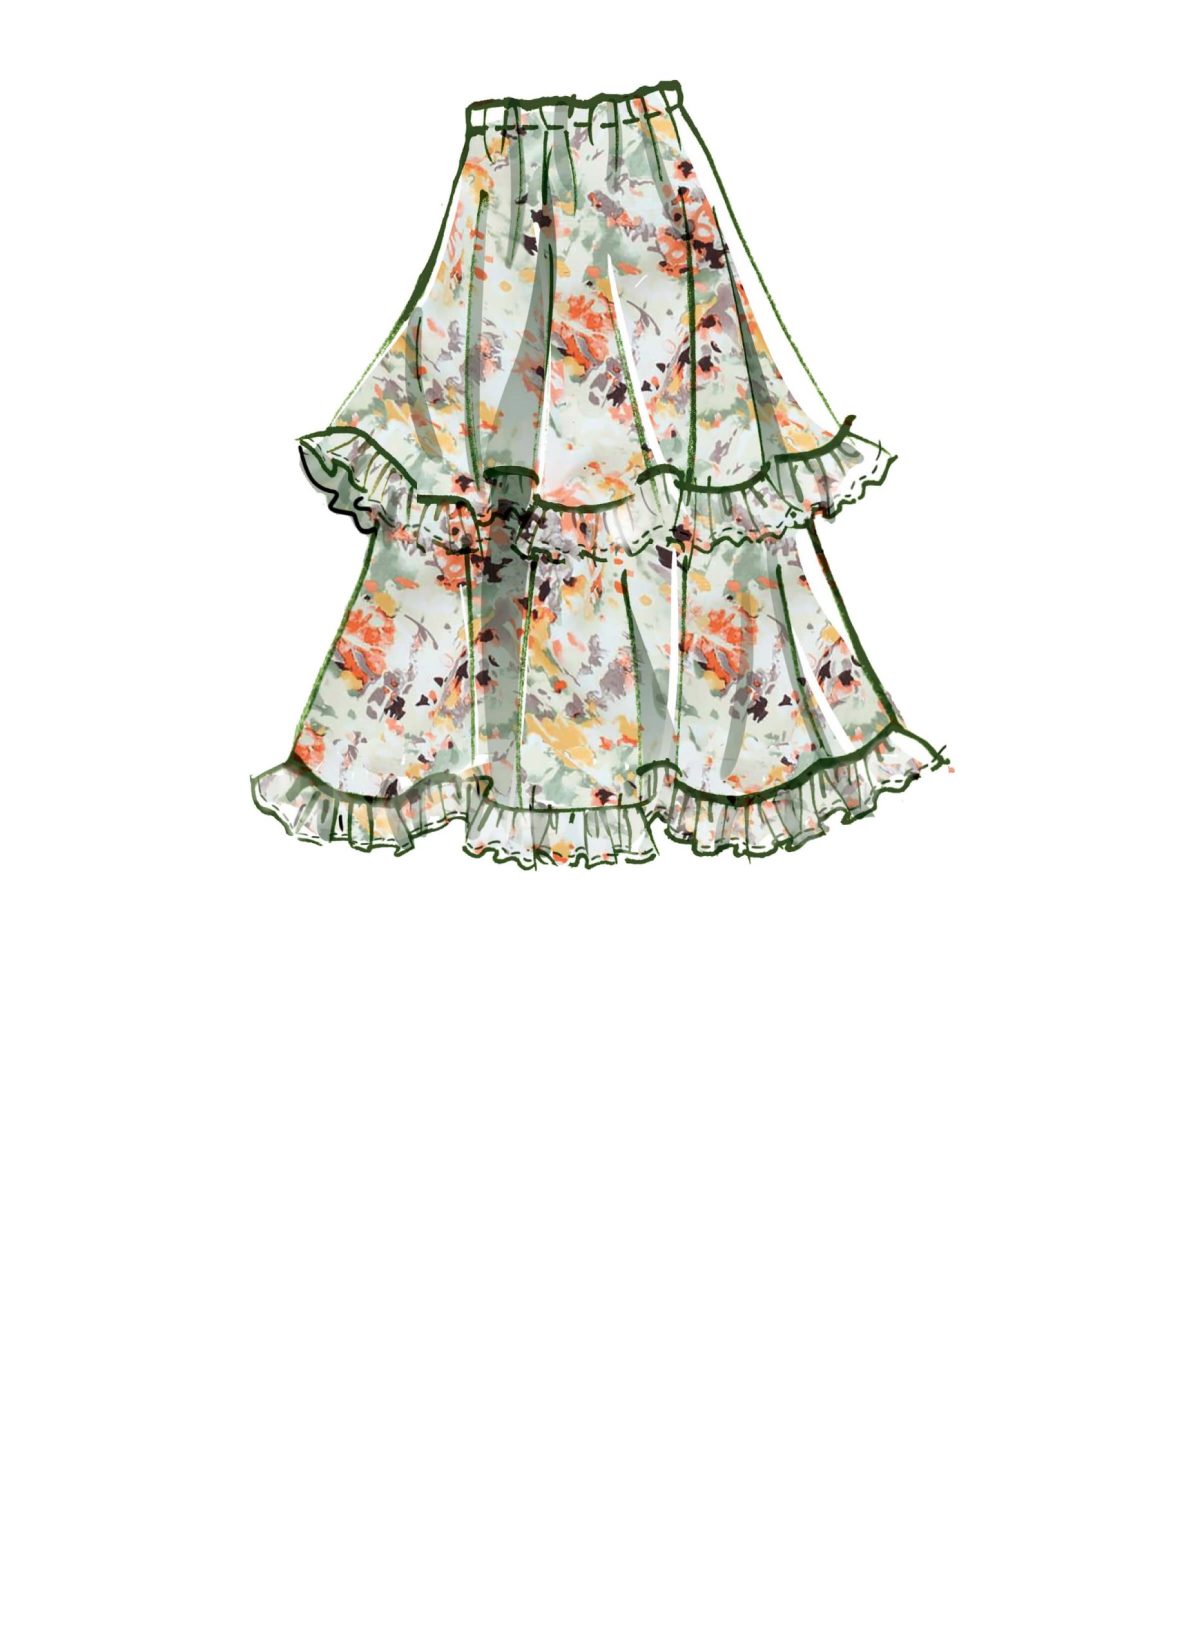 McCall's Sewing Pattern M8150 Misses' Skirts #TillaryMcCalls